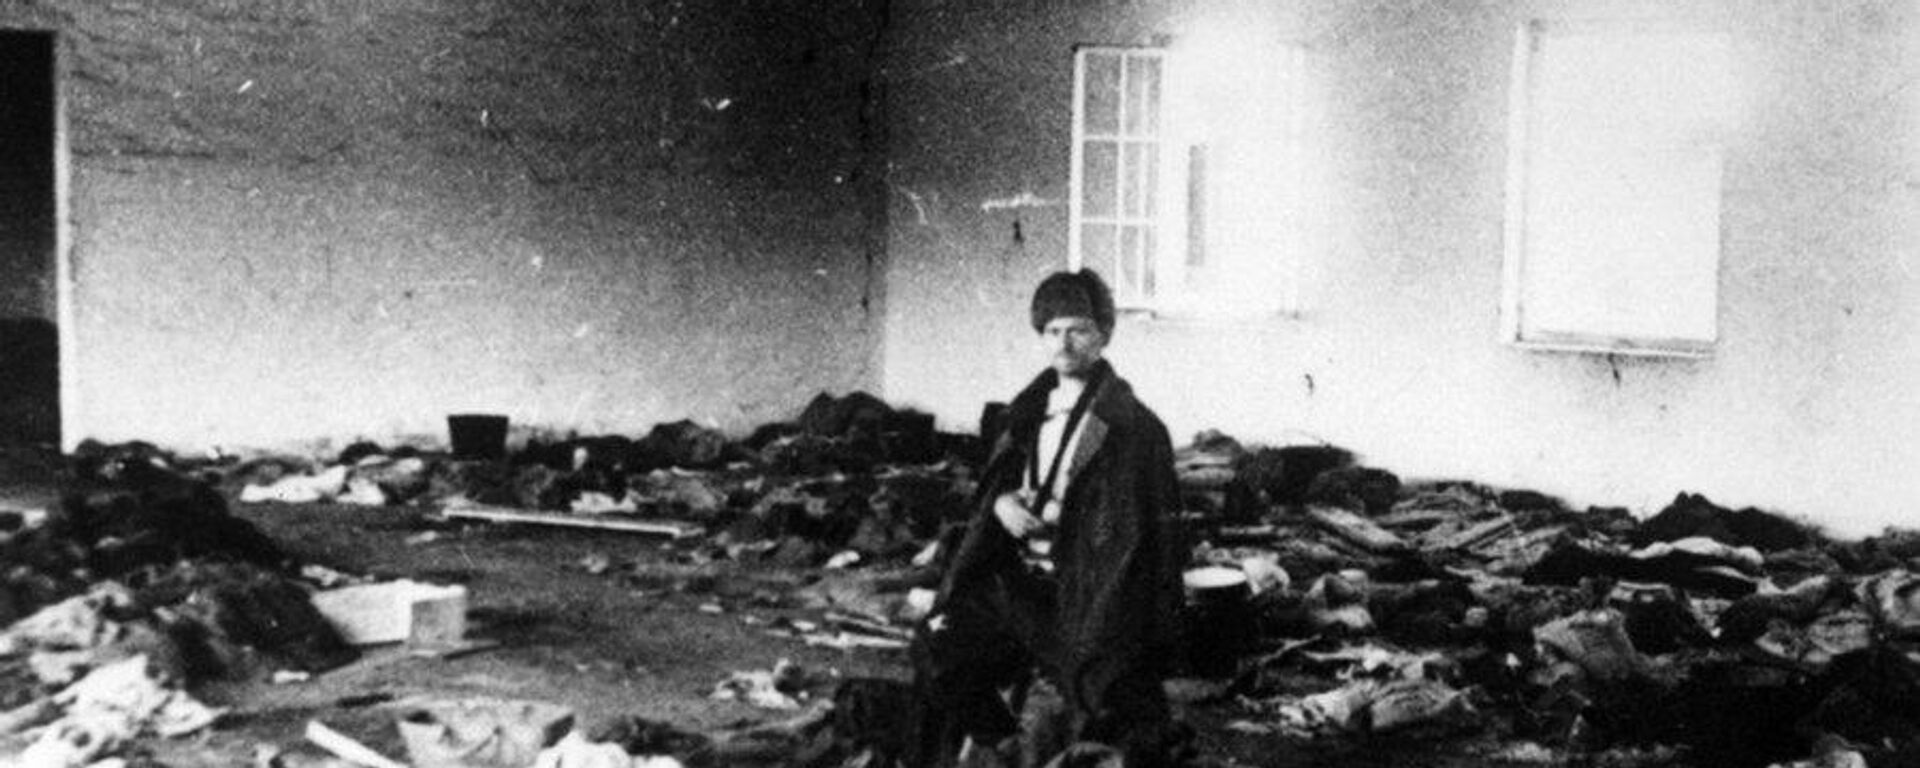 Campo de exterminio nazi liberado por la Unión Soviética en 1945. - Sputnik Mundo, 1920, 09.08.2022